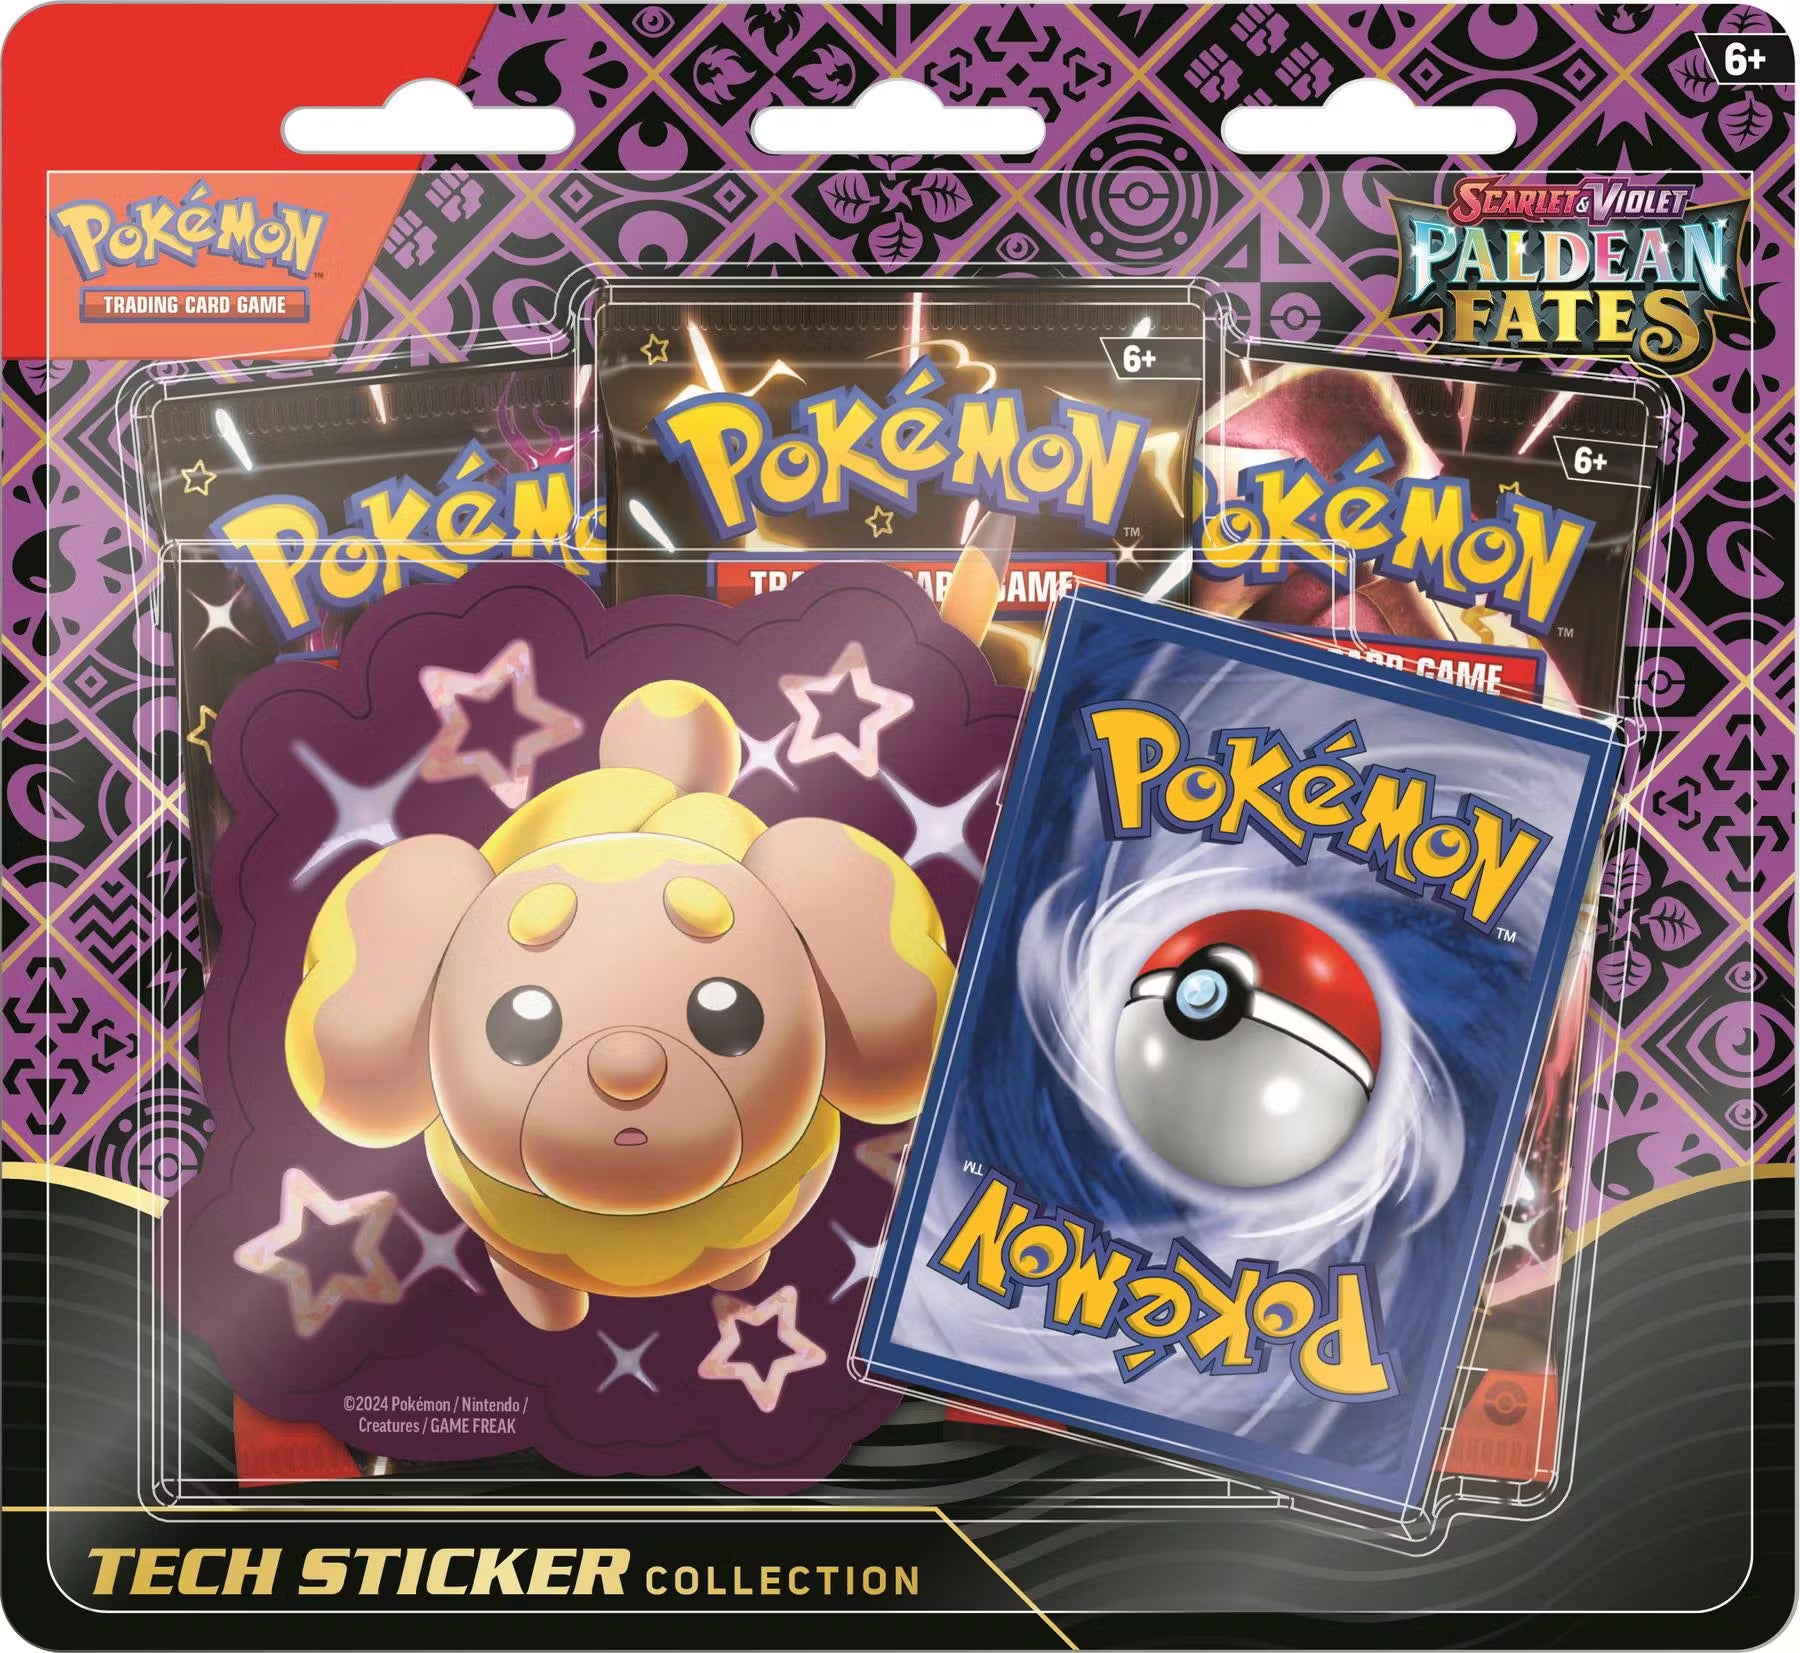 Paldean Fates Tech Sticker Collection Pokemon Scarlet and Violet 4.5